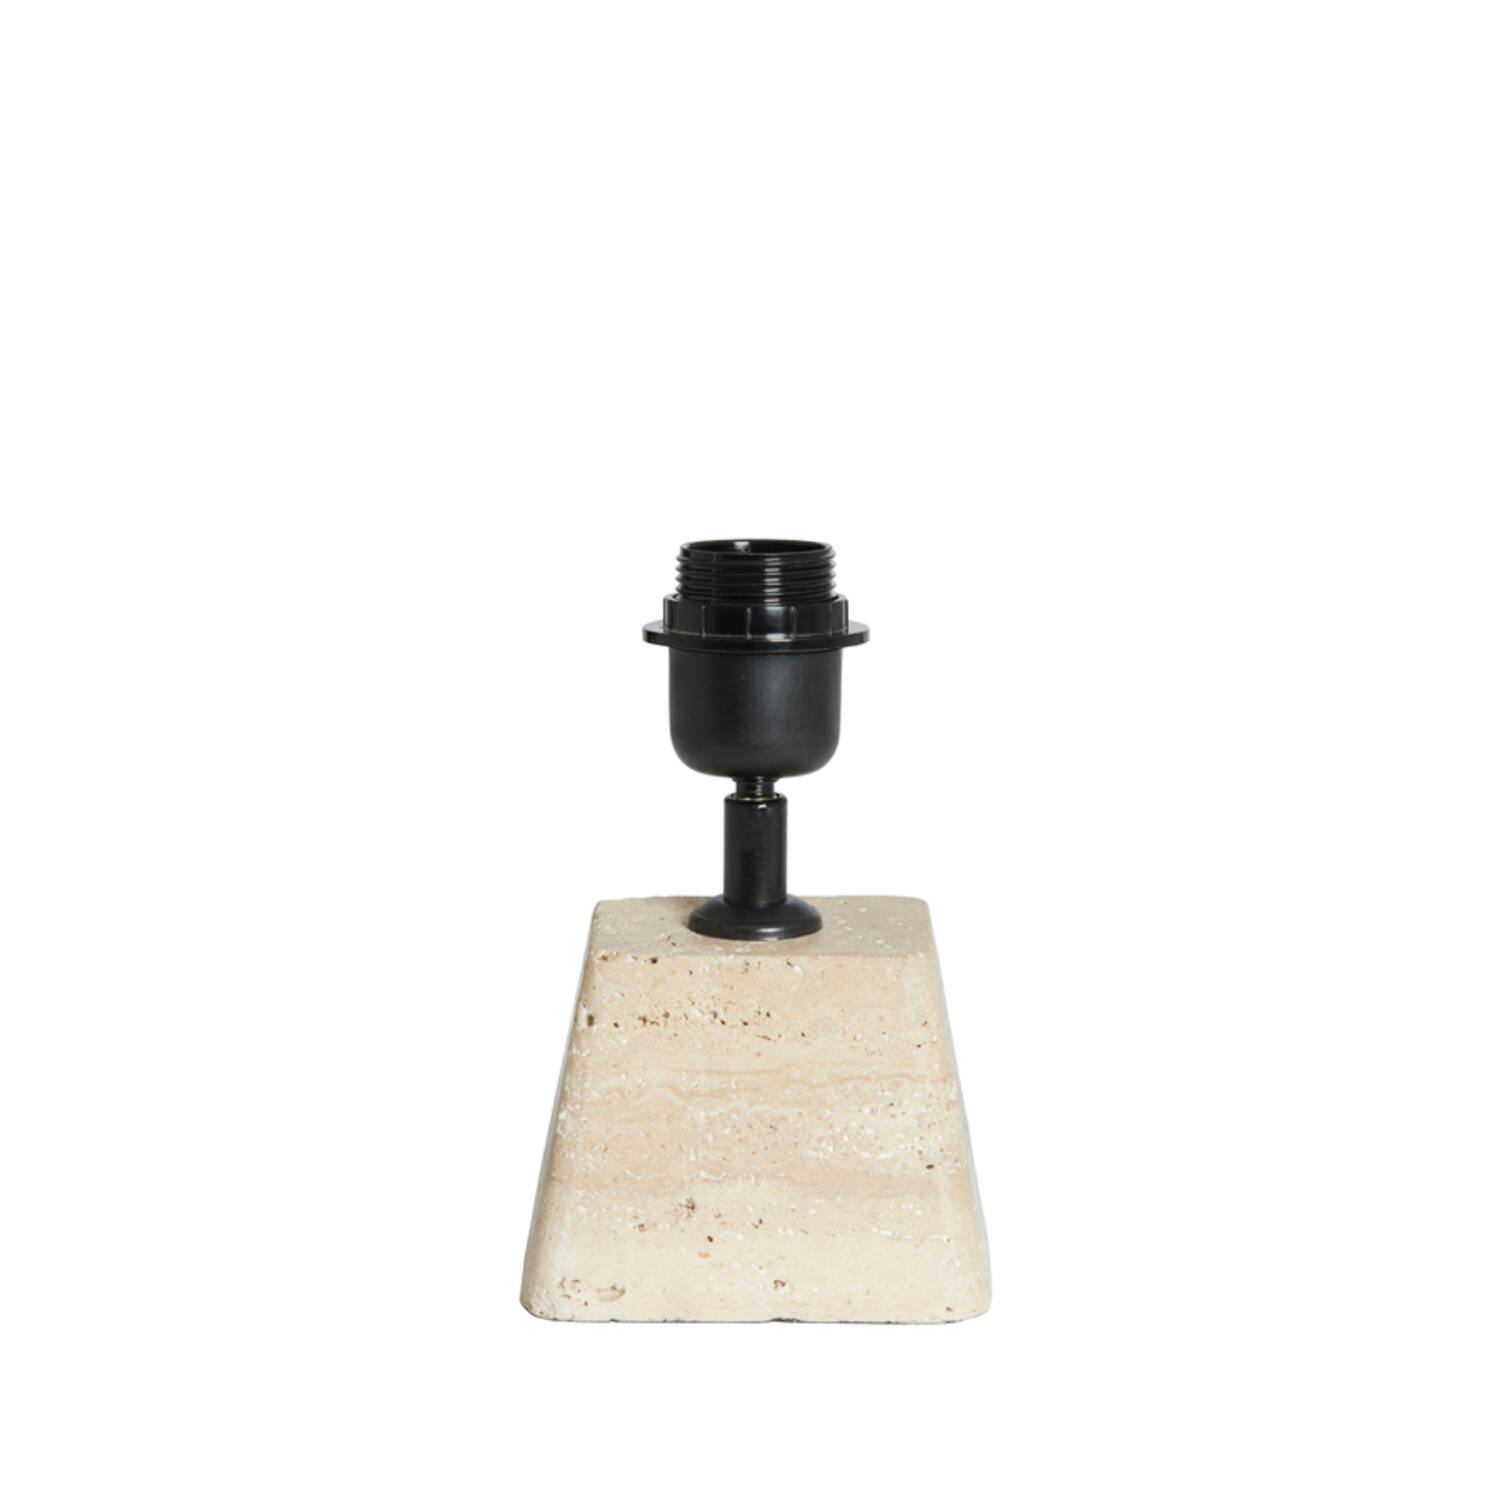 Lamp base 11x9x19 cm KARDAN travertine sand